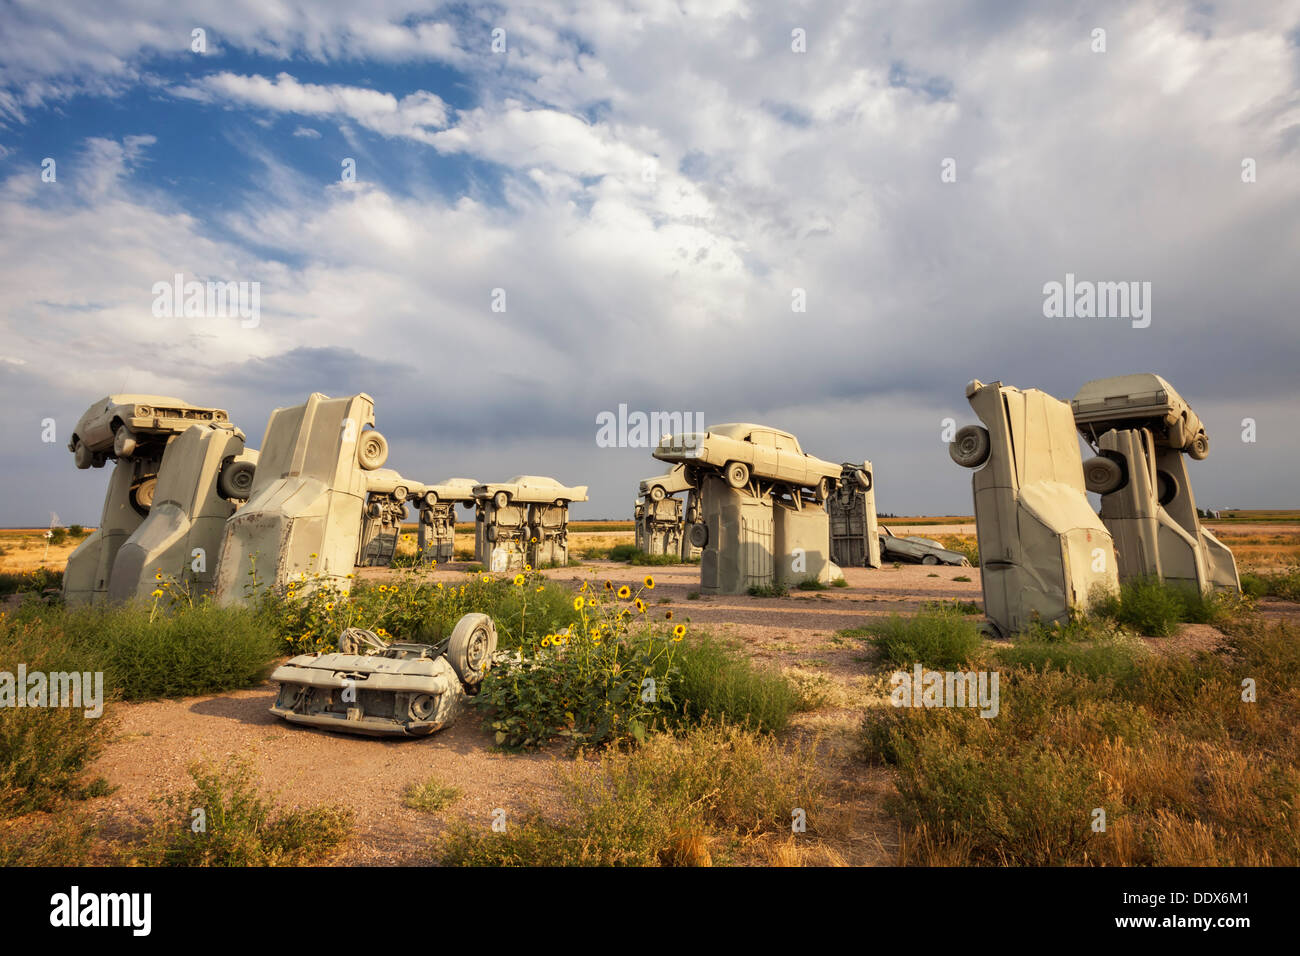 Cars arranged to replicate Stonehenge in England is called Carhenge, Alliance, Nebraska Stock Photo